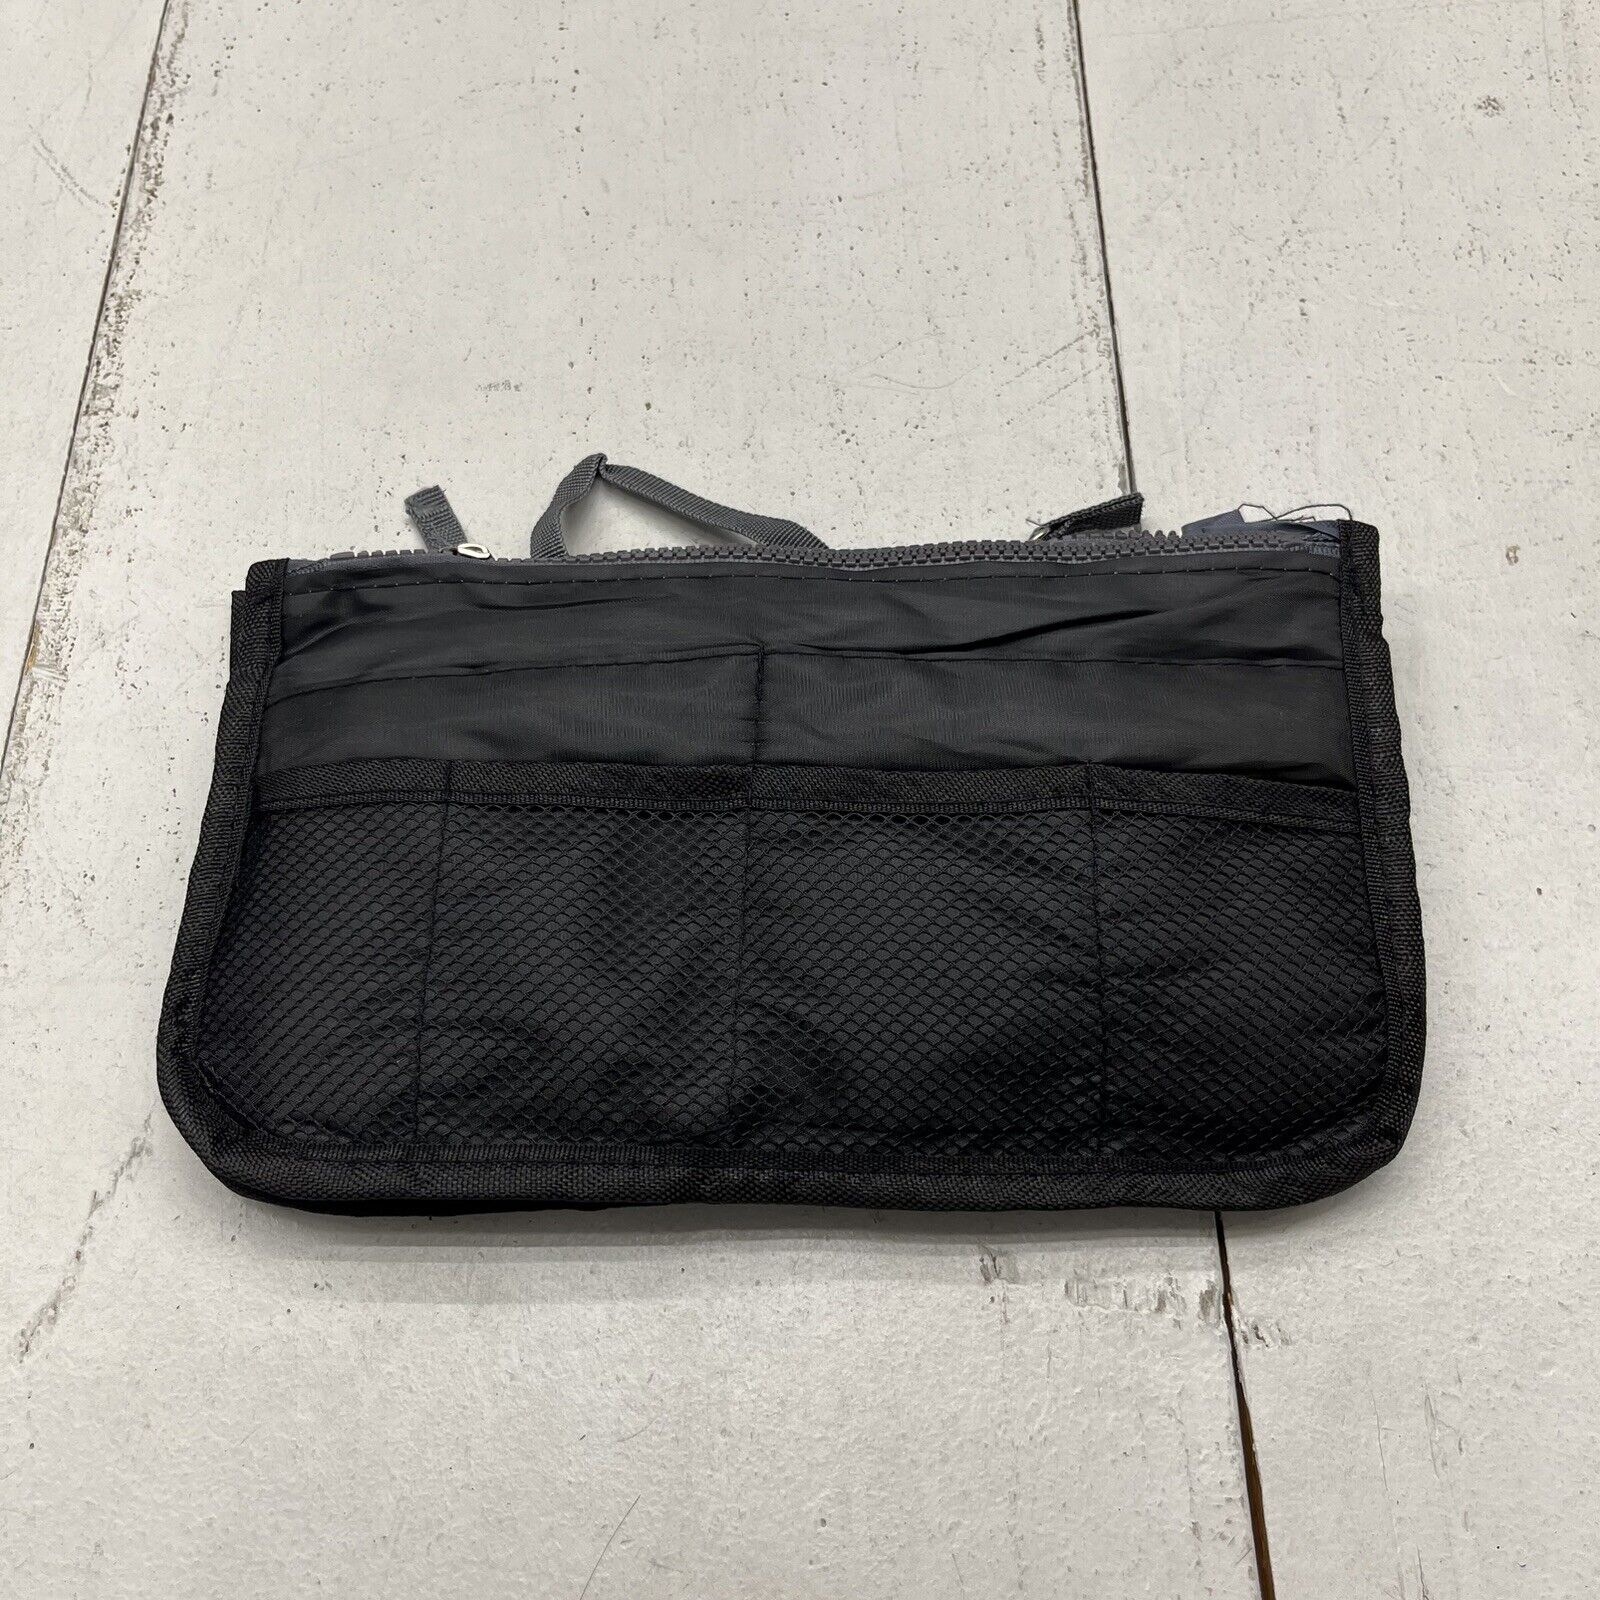 Shein Black & Gray 6 Pocket Organizer Bag NEW